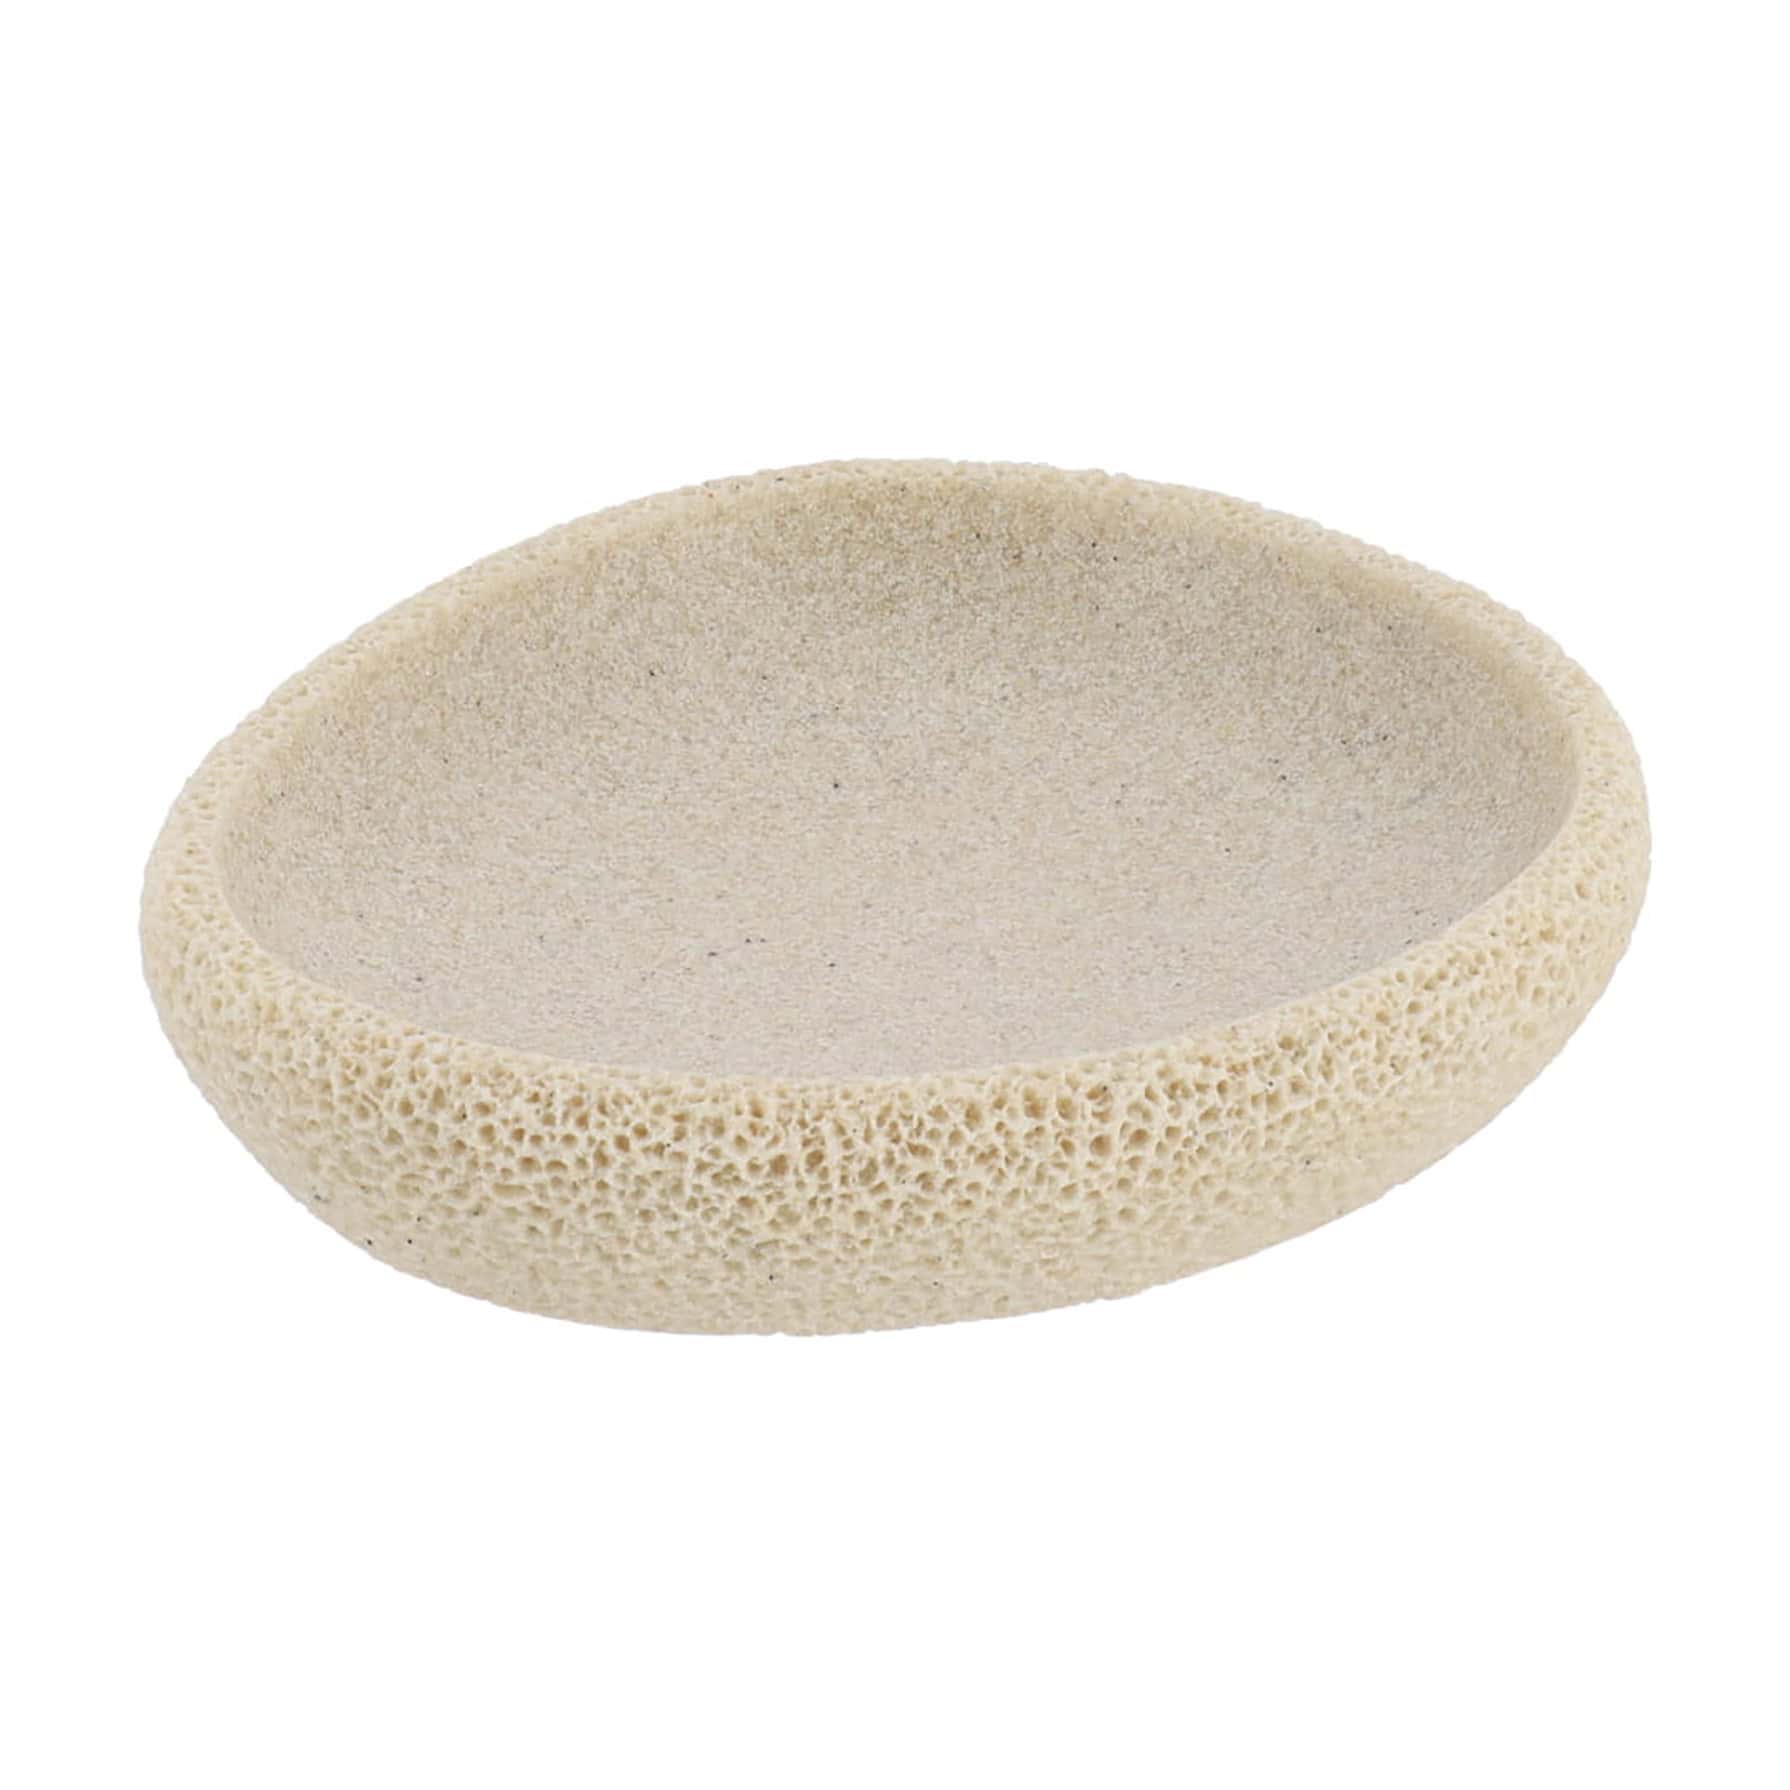 Beige soap dish with sea sponge texture